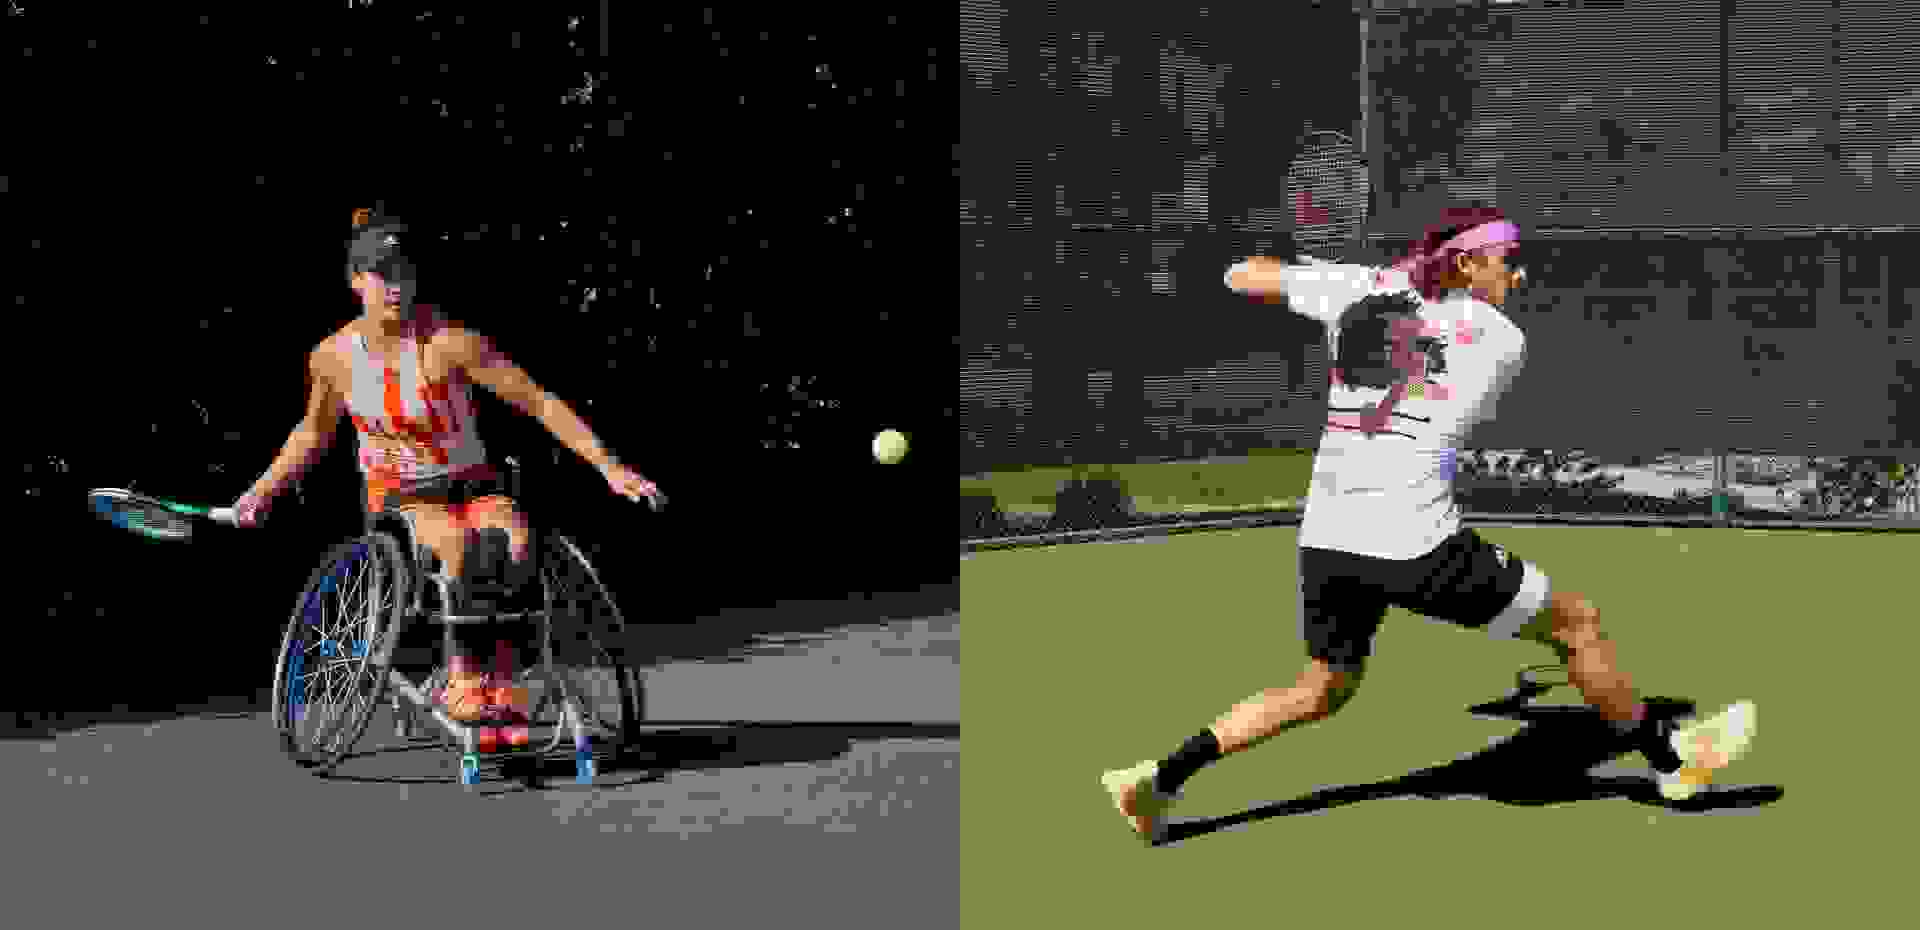 images of Mathewson and Tsitsipas playing tennis